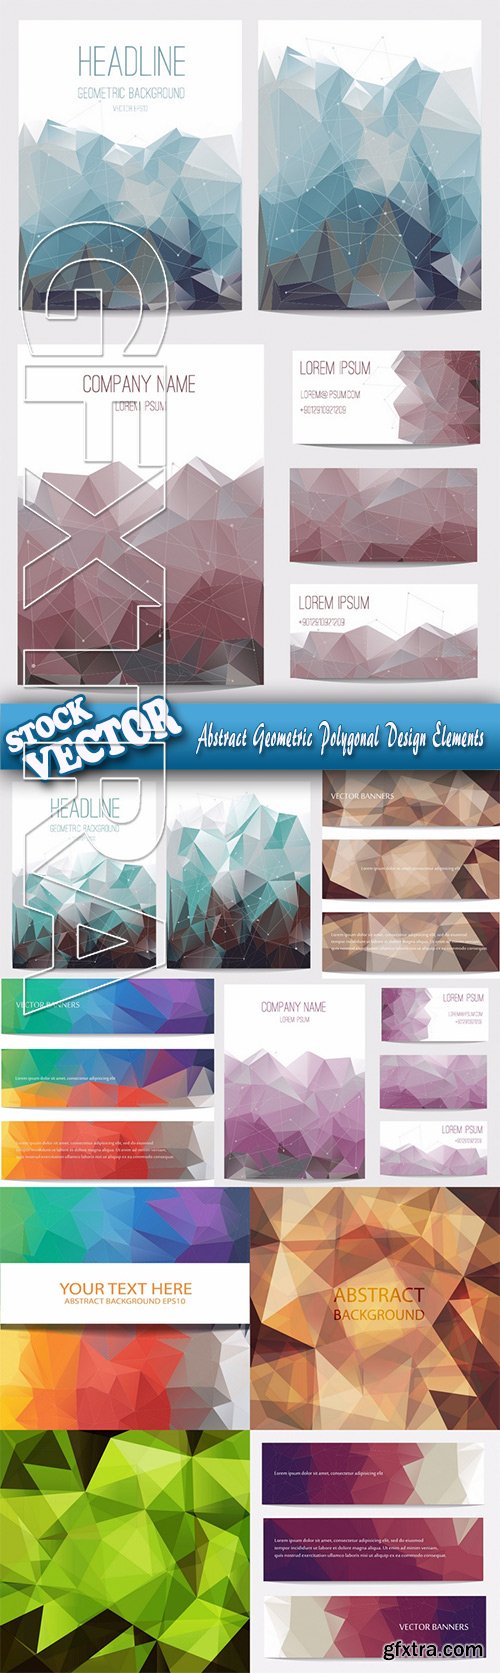 Stock Vector - Abstract Geometric Polygonal Design Elements